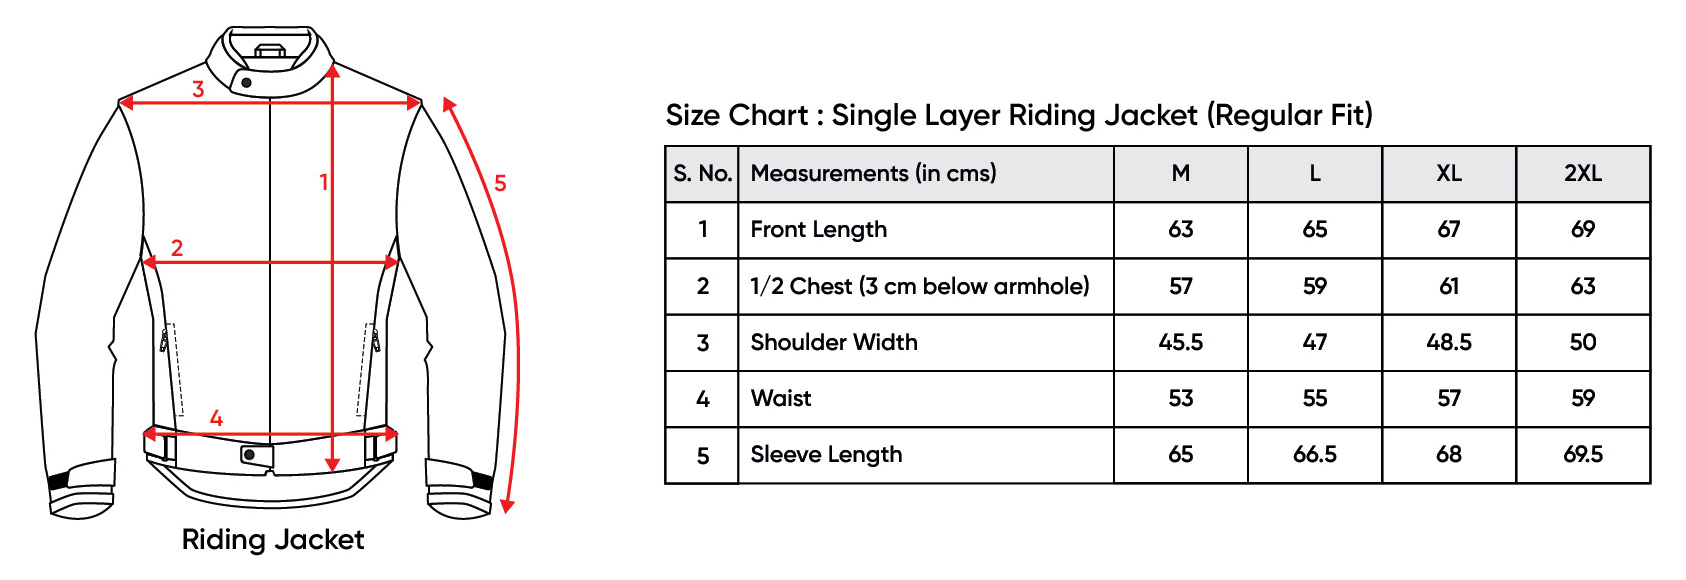 Single layer riding jacket